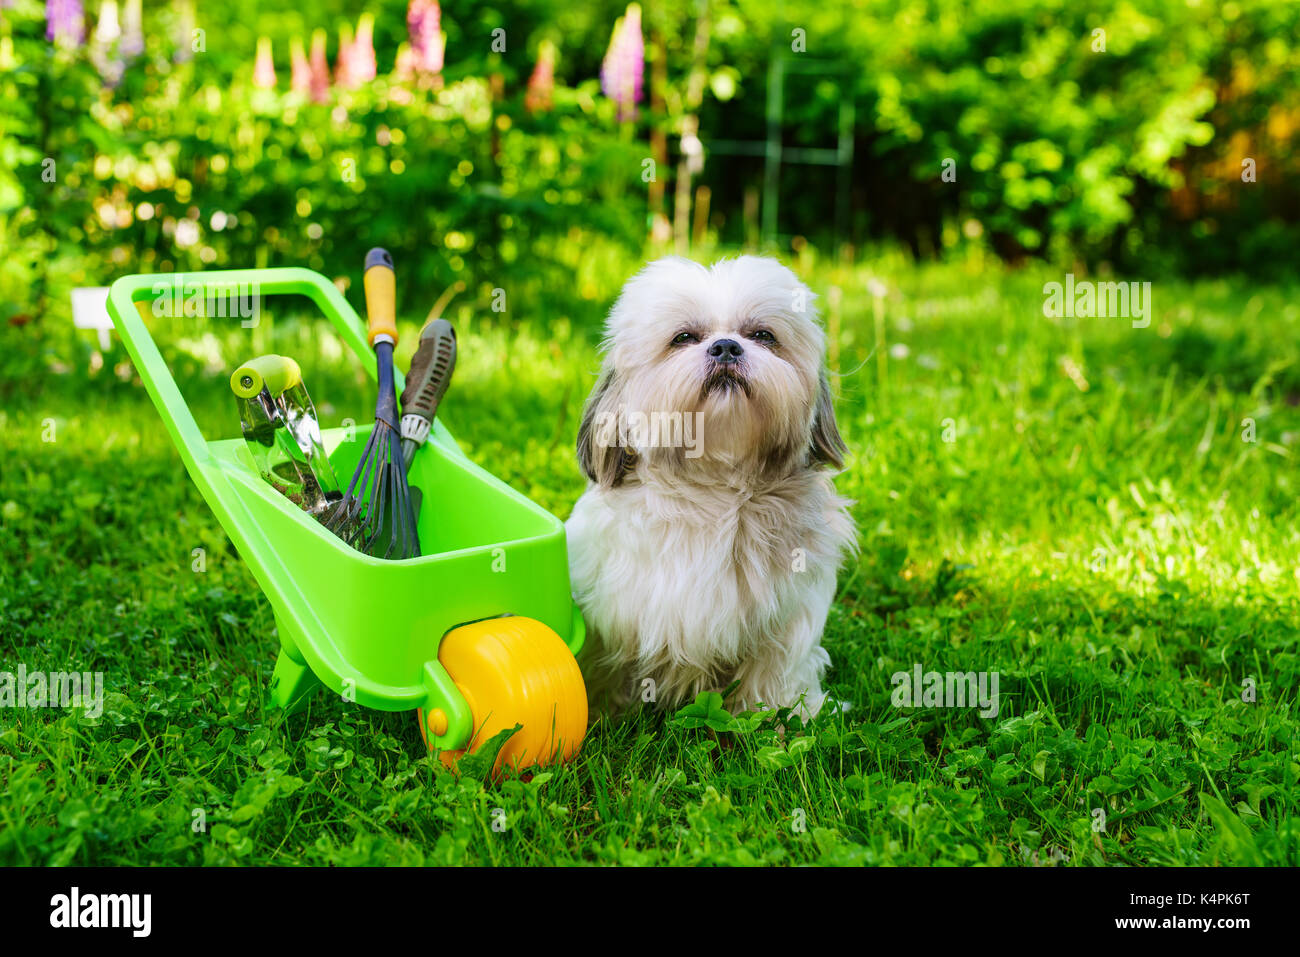 Cute shih tzu dog in summer garden with wheelbarrow and tools Stock Photo